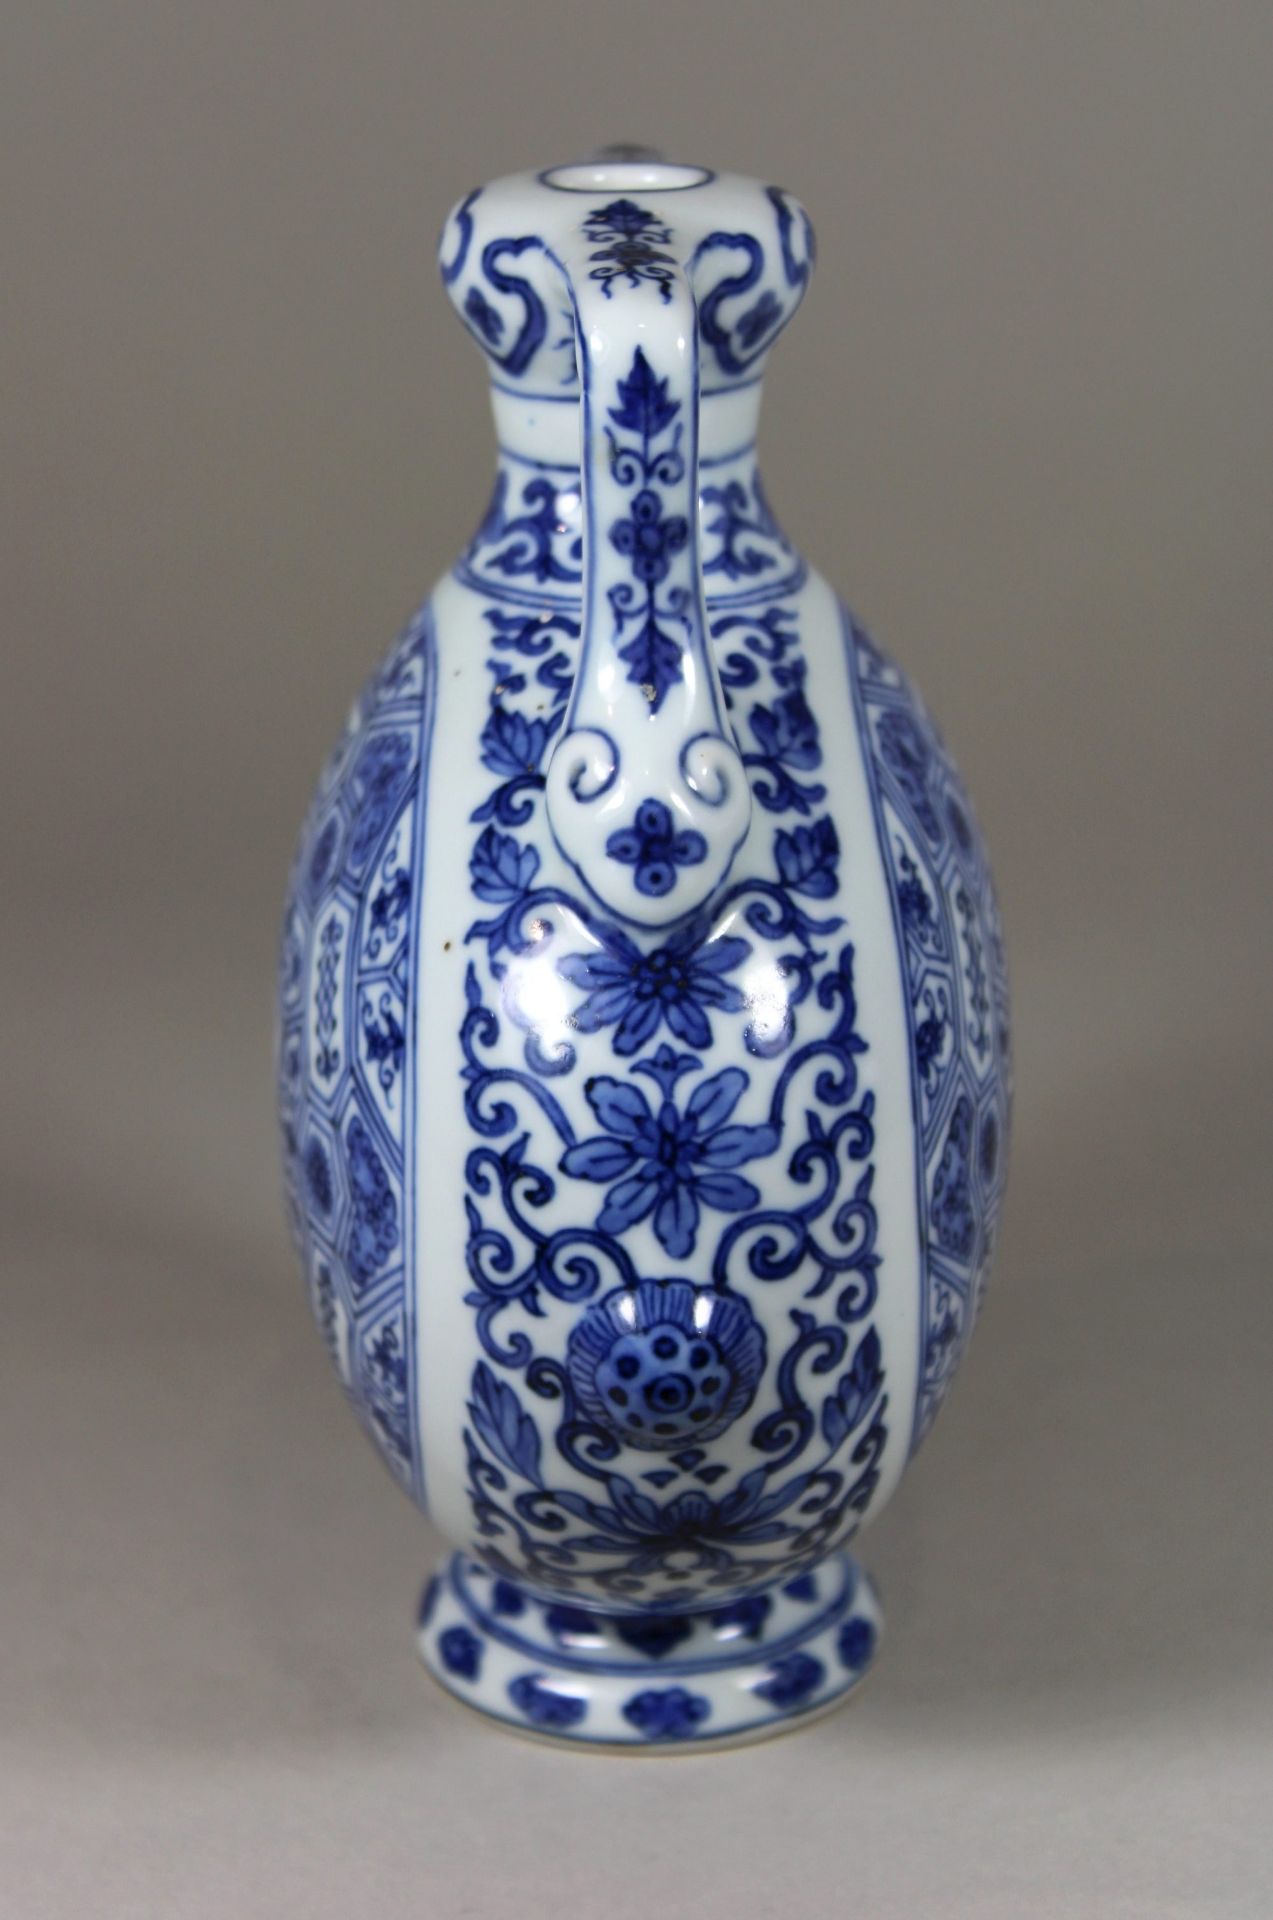 Baoyueping Vase, China, Porzellan, Qianlong Marke, blau-weiß bemalt, H.: 18 cm, B.: 14,5 cm. Guter, - Bild 2 aus 4